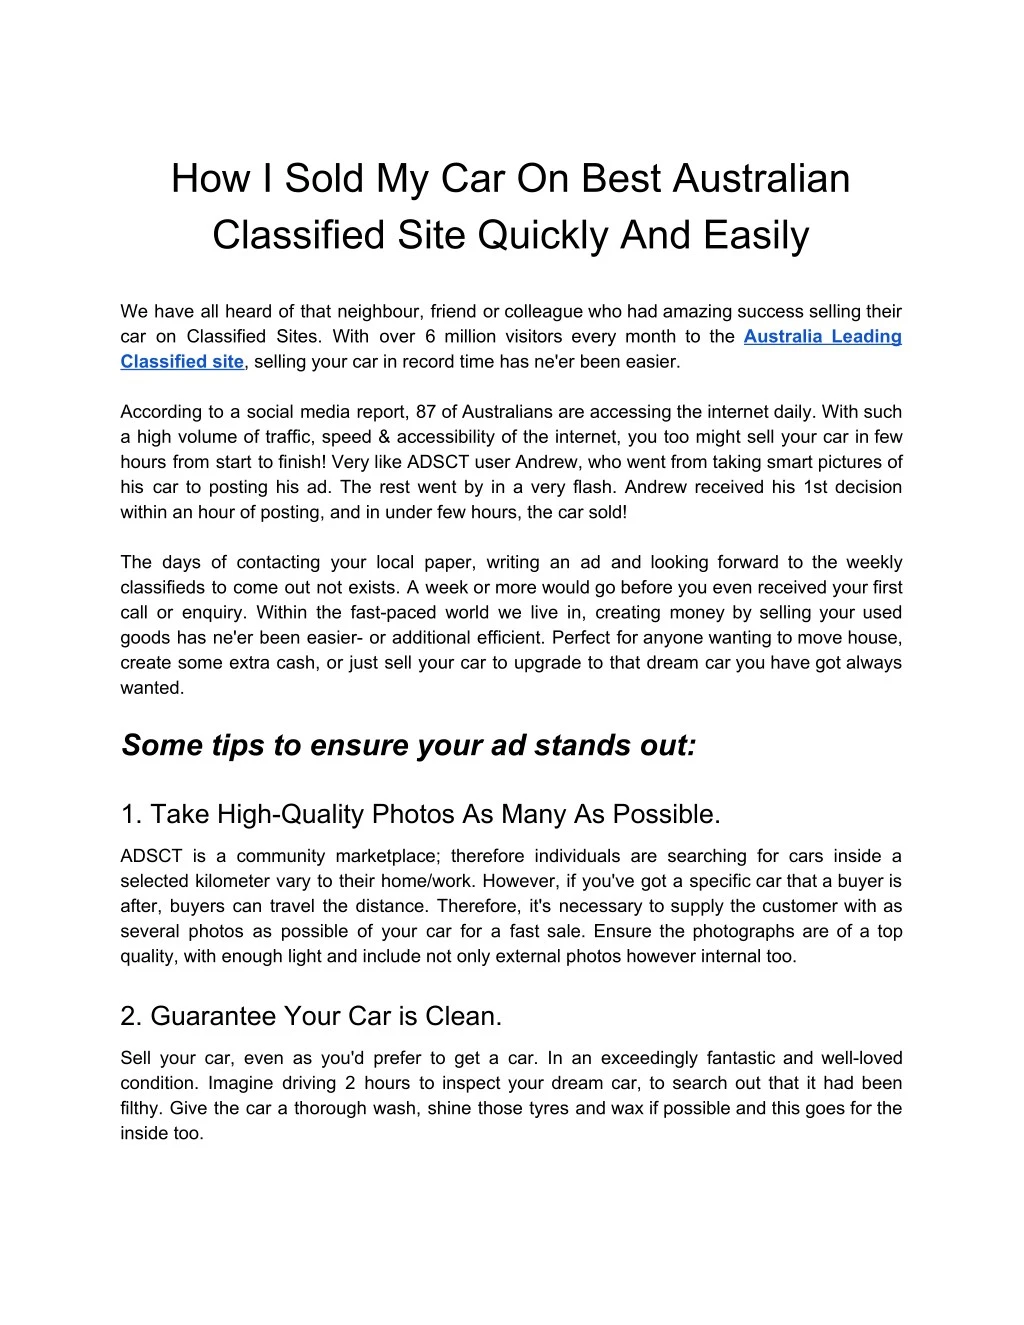 how i sold my car on best australian classified